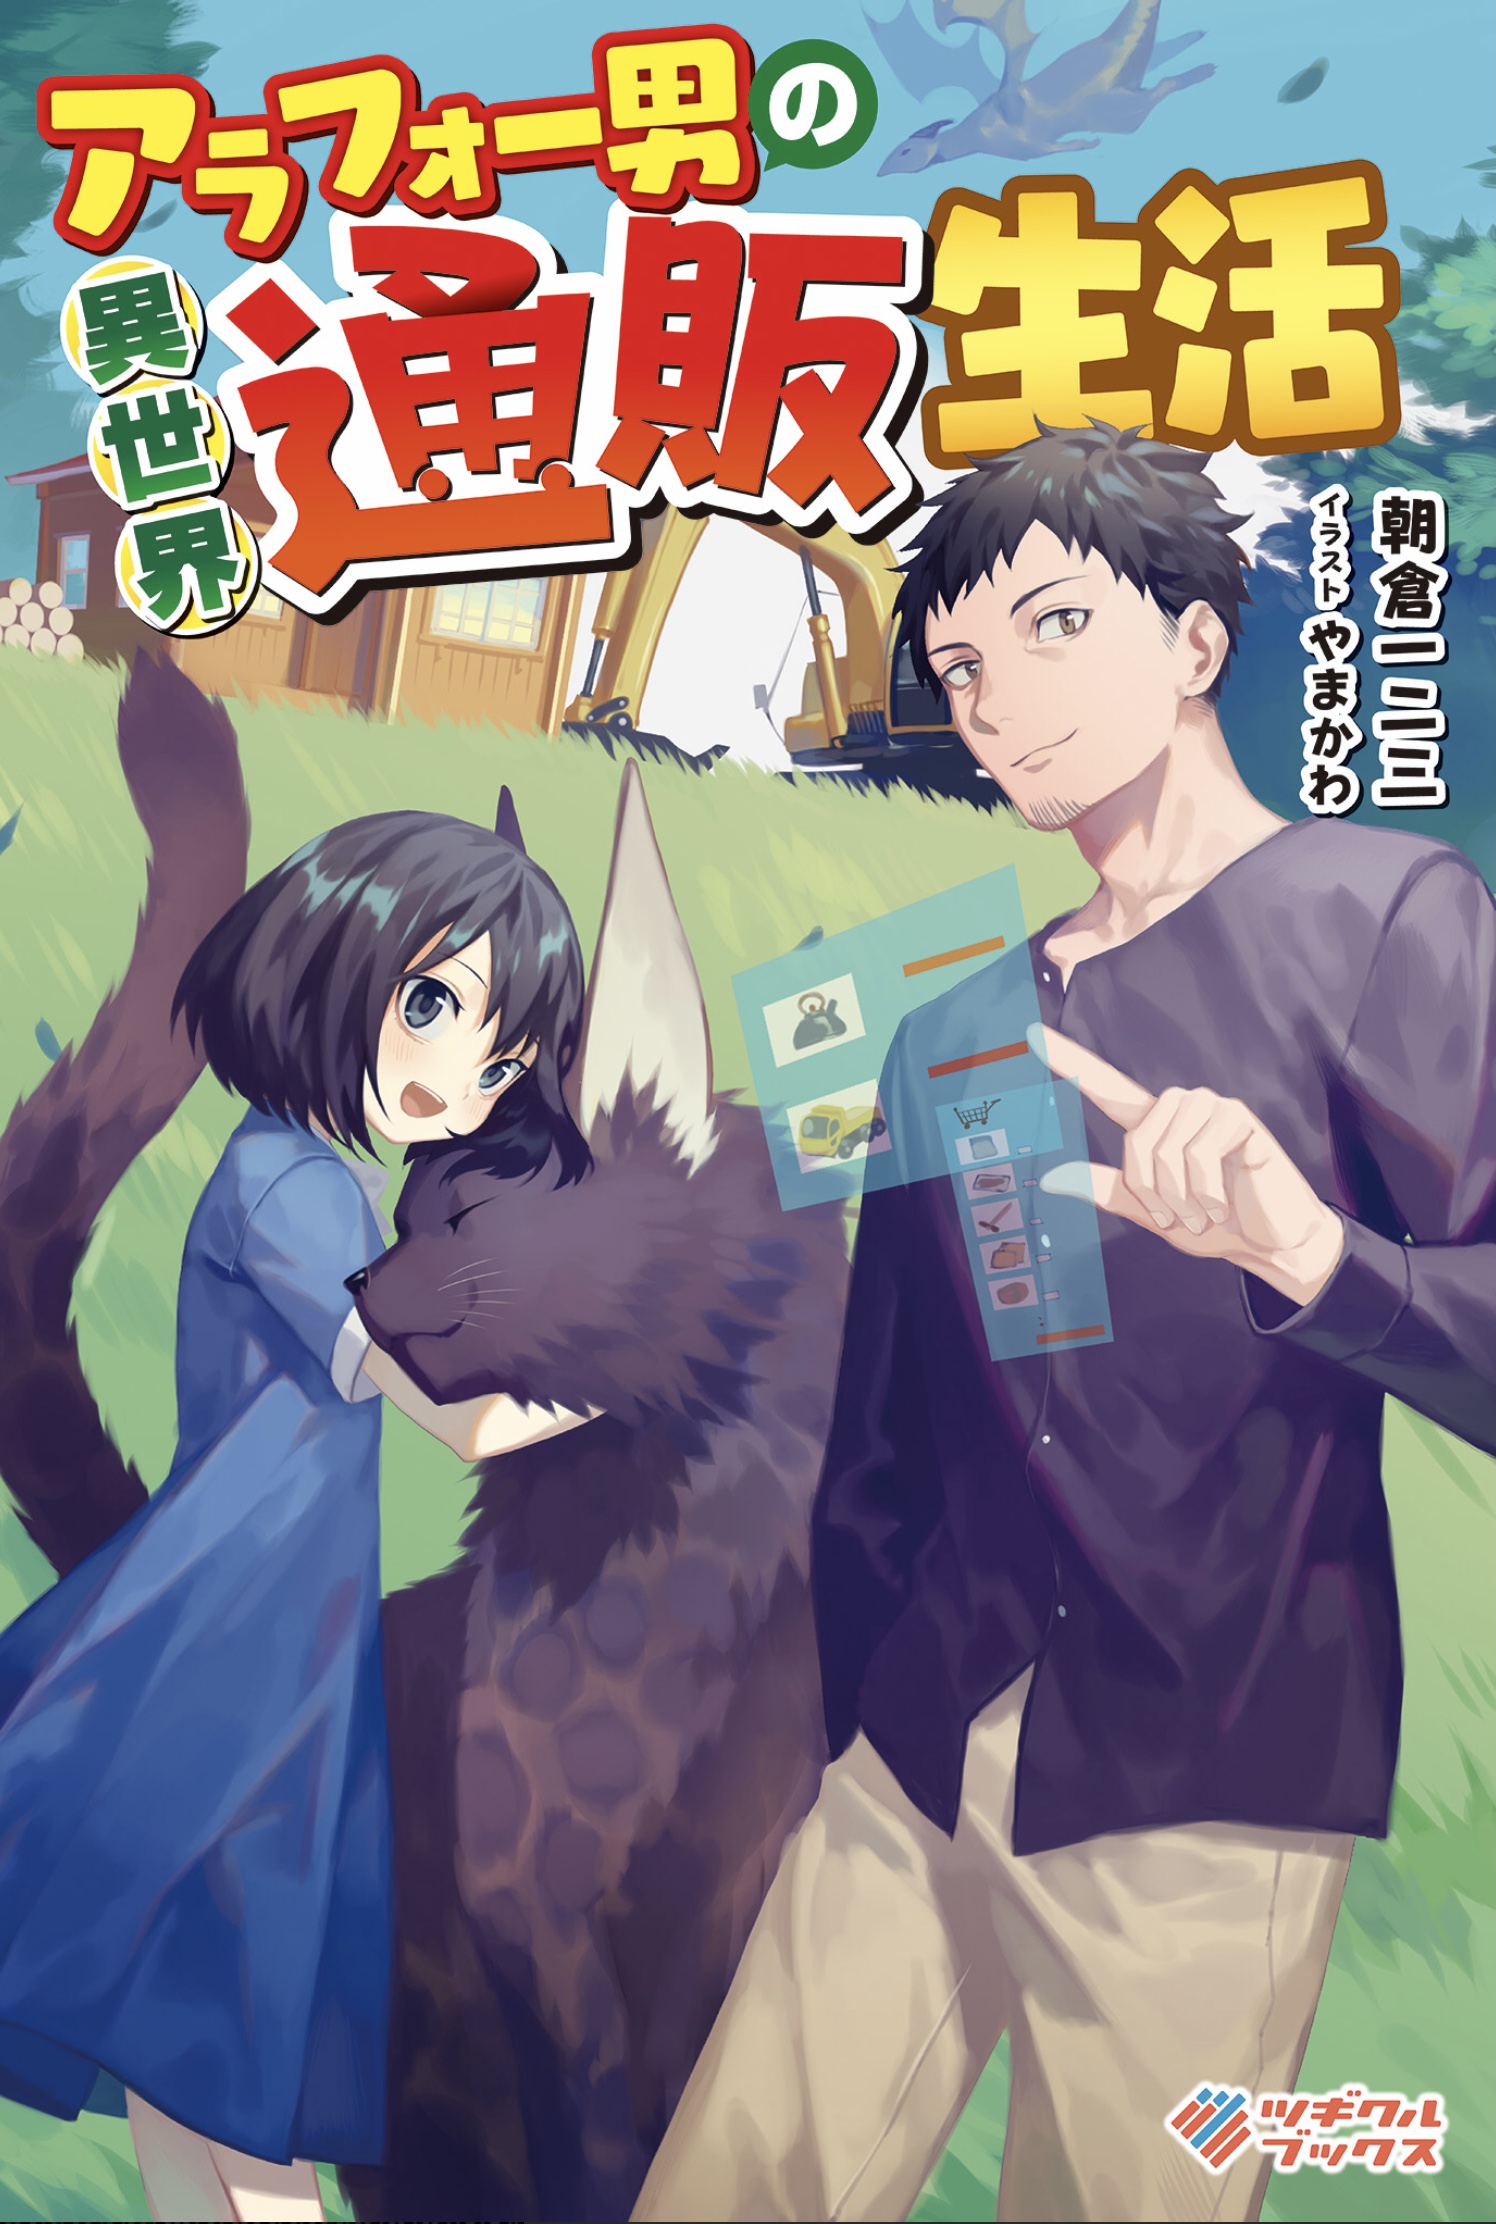 Takeshi's News Center - Light novel and manga series Isekai Nonbiri Nouka  by Yasuyuki Tsurugi, Kinosuke Naitou is on cover of the upcoming Dragon Age  issue 6/2022. Also featuring inside: TV anime